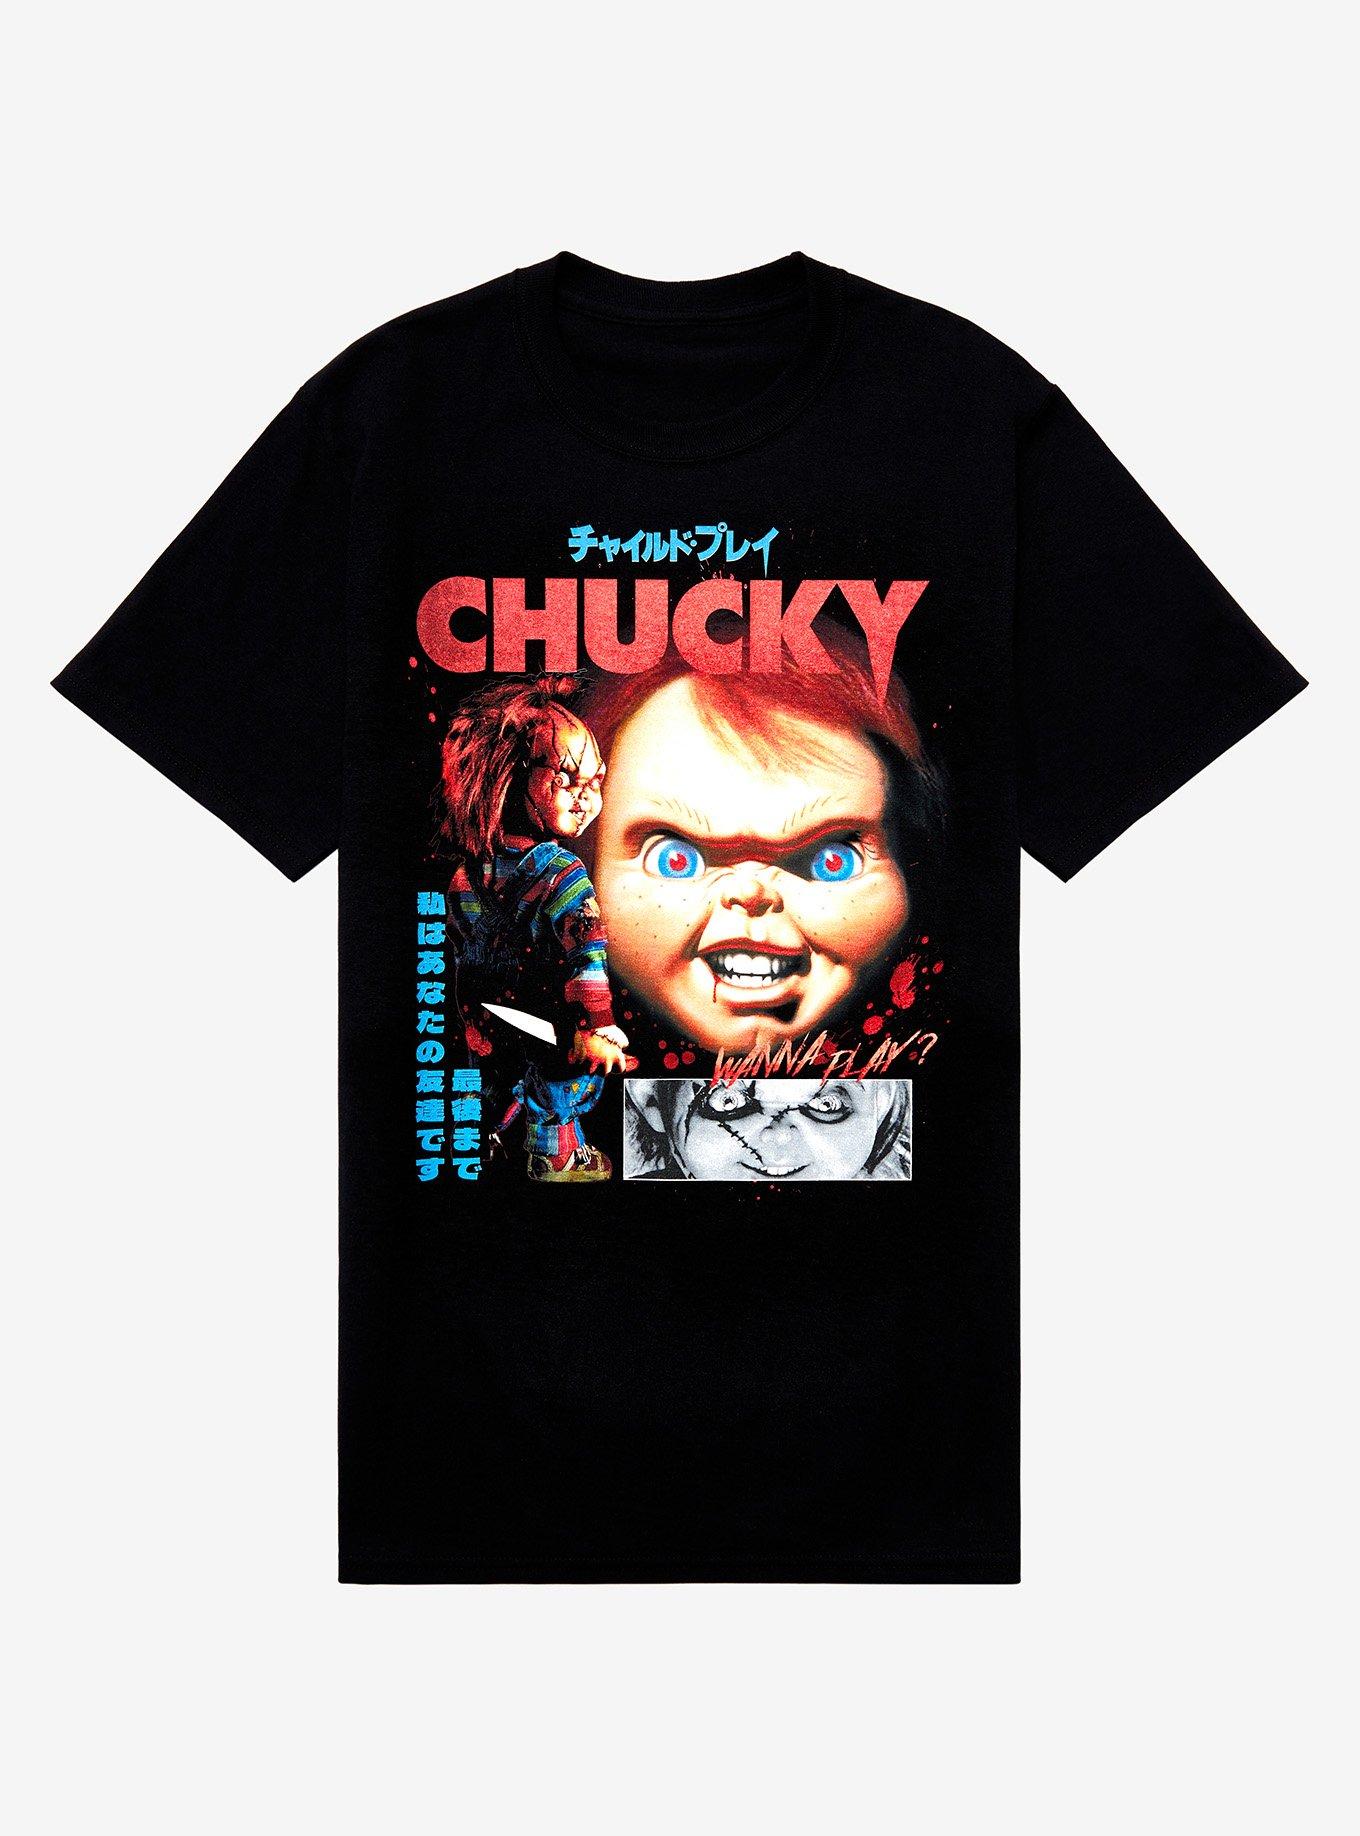 Child's Play Chucky Collage Boyfriend Fit Girls T-Shirt